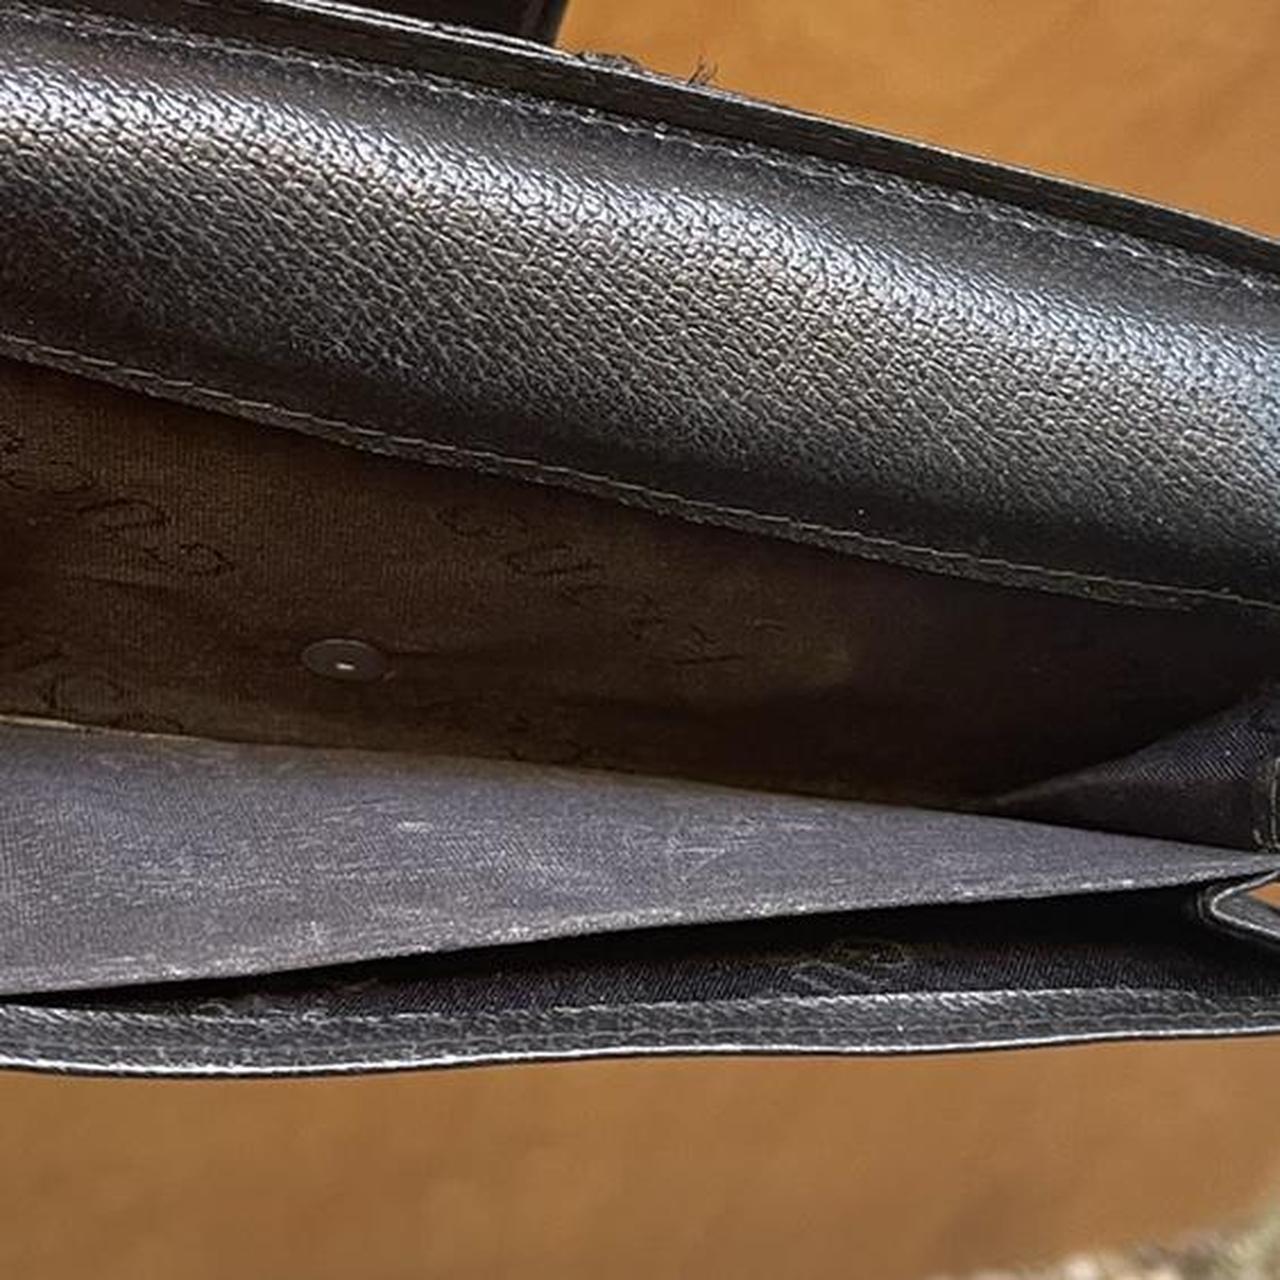 Product Image 4 - Vintage black Gucci Wallet

100% authentic!

Has